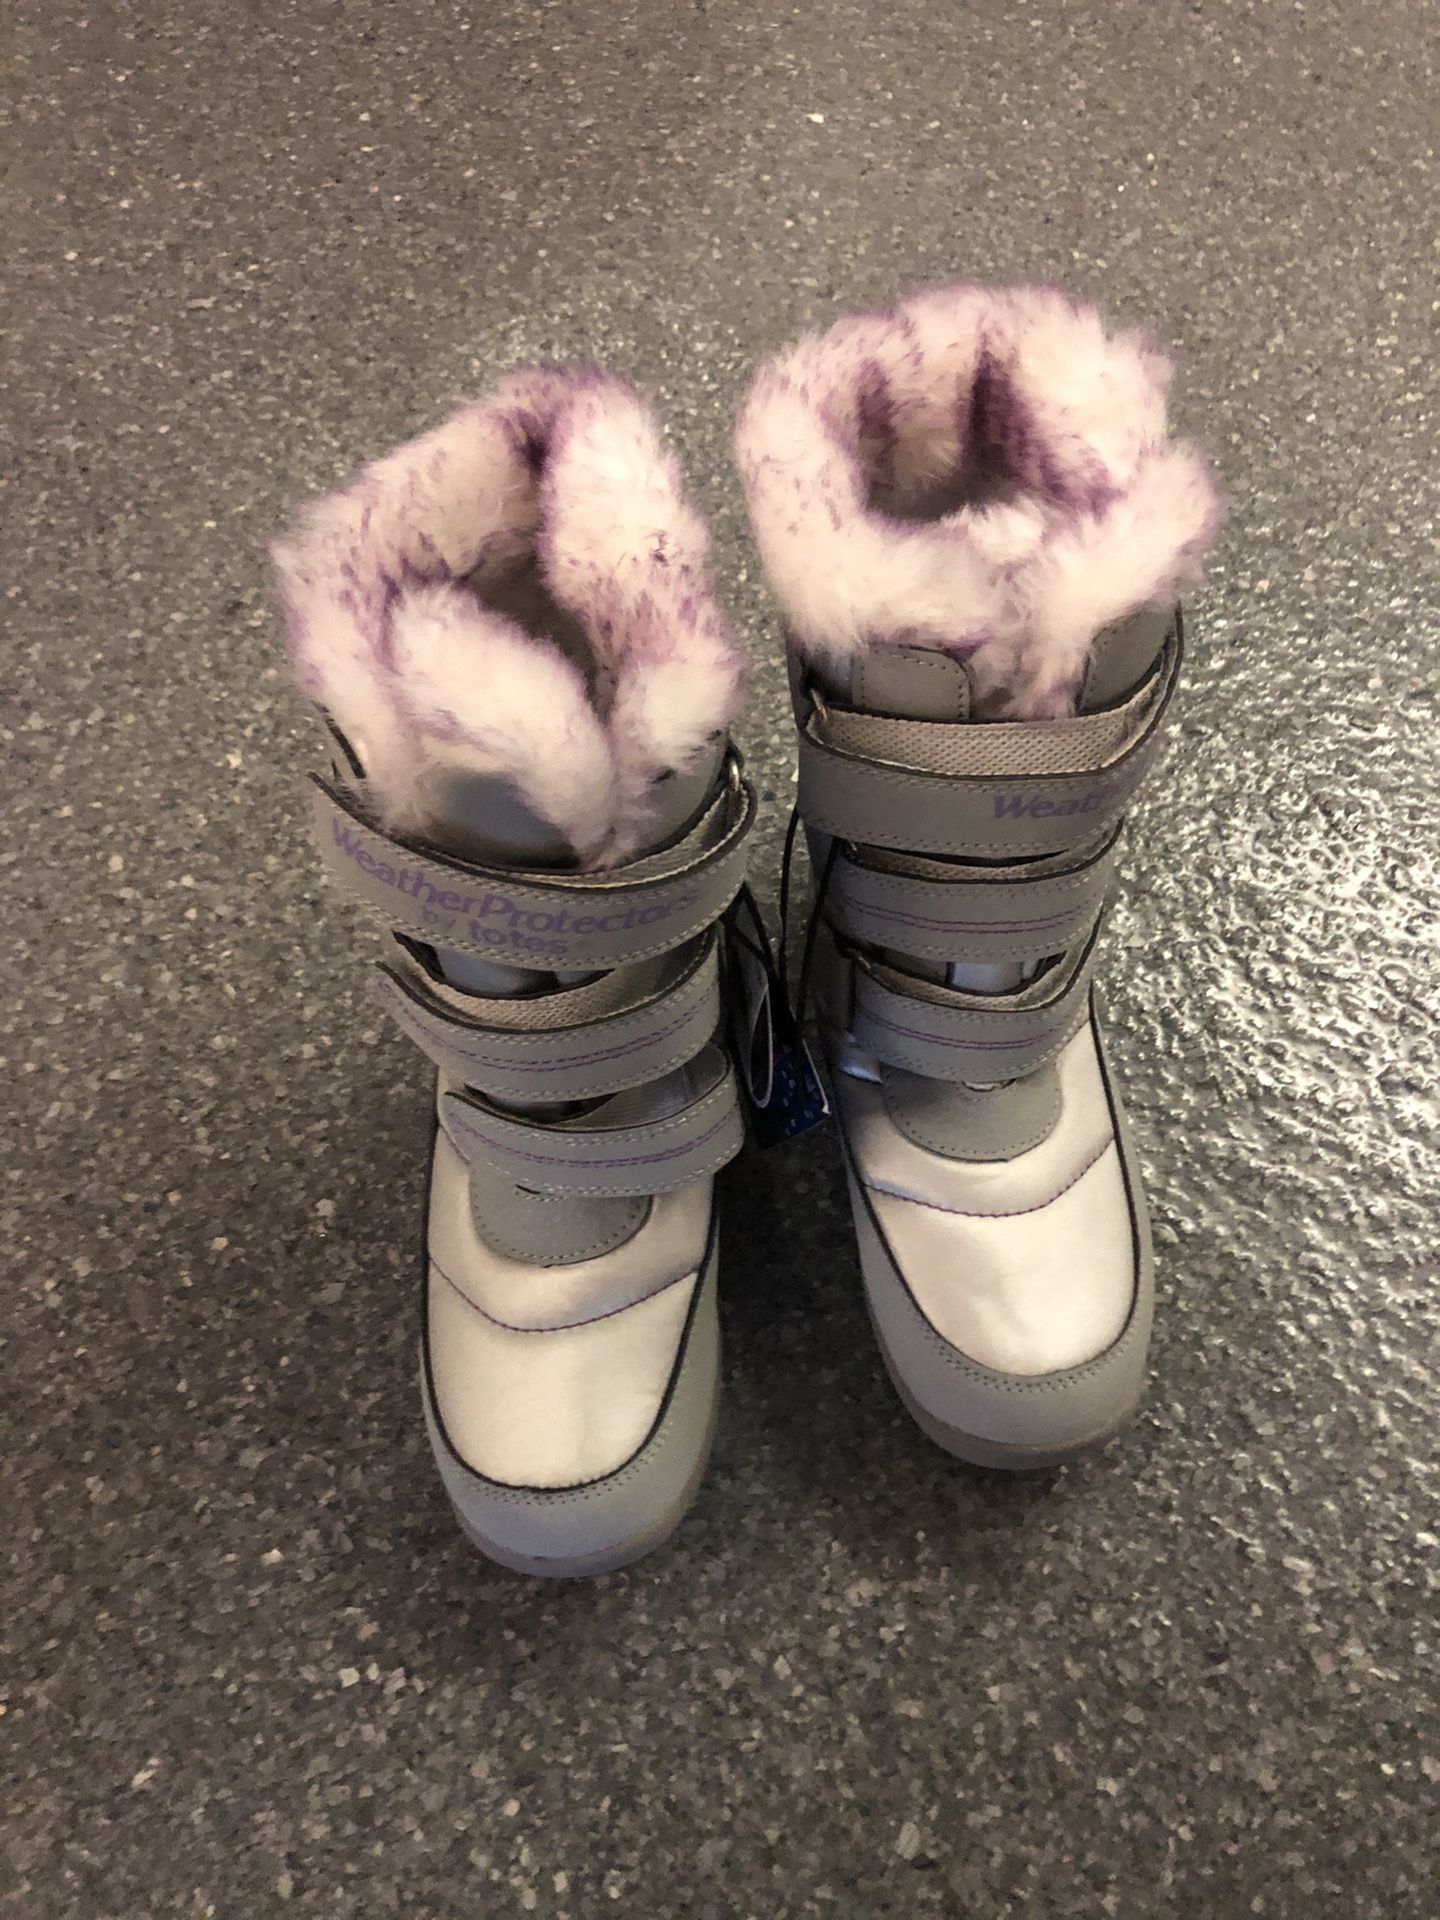 NEW Girls Snow Boots Sz 2